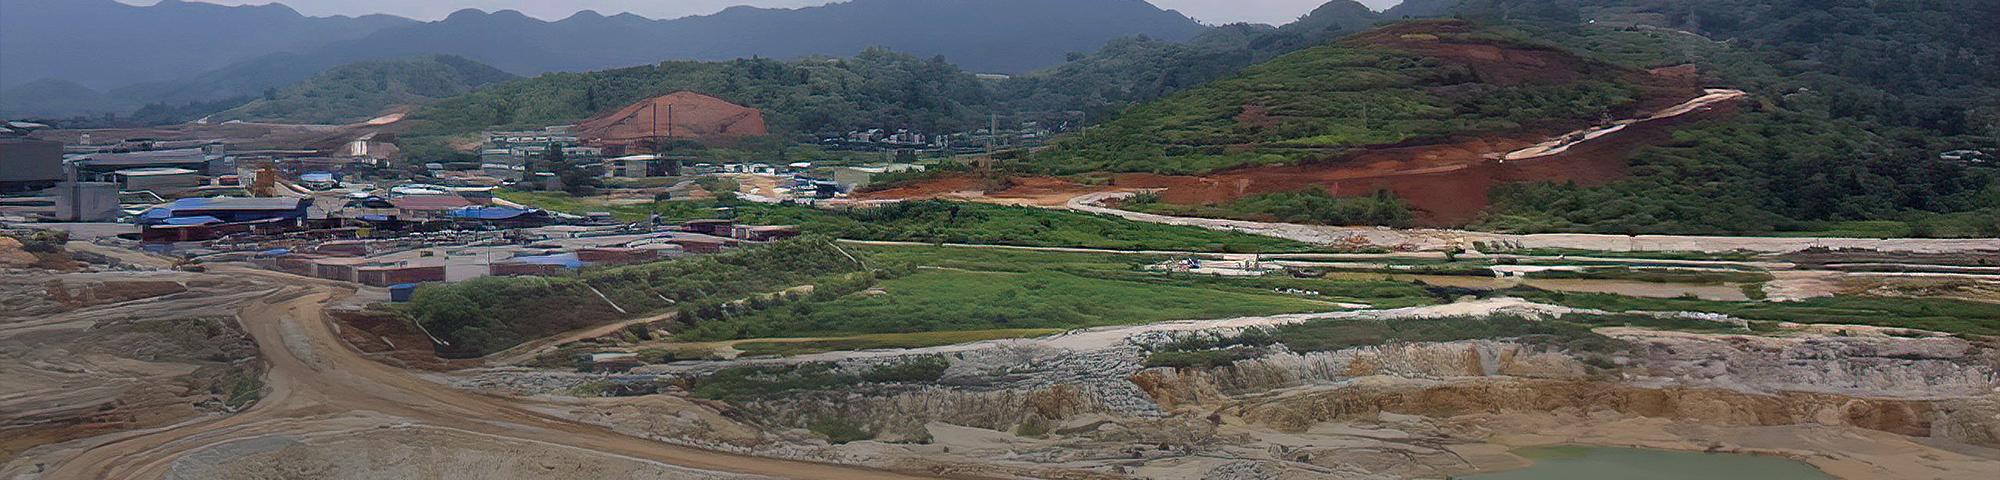 Open-pit mining of tungsten (Vietnam: Nui Phao mine)